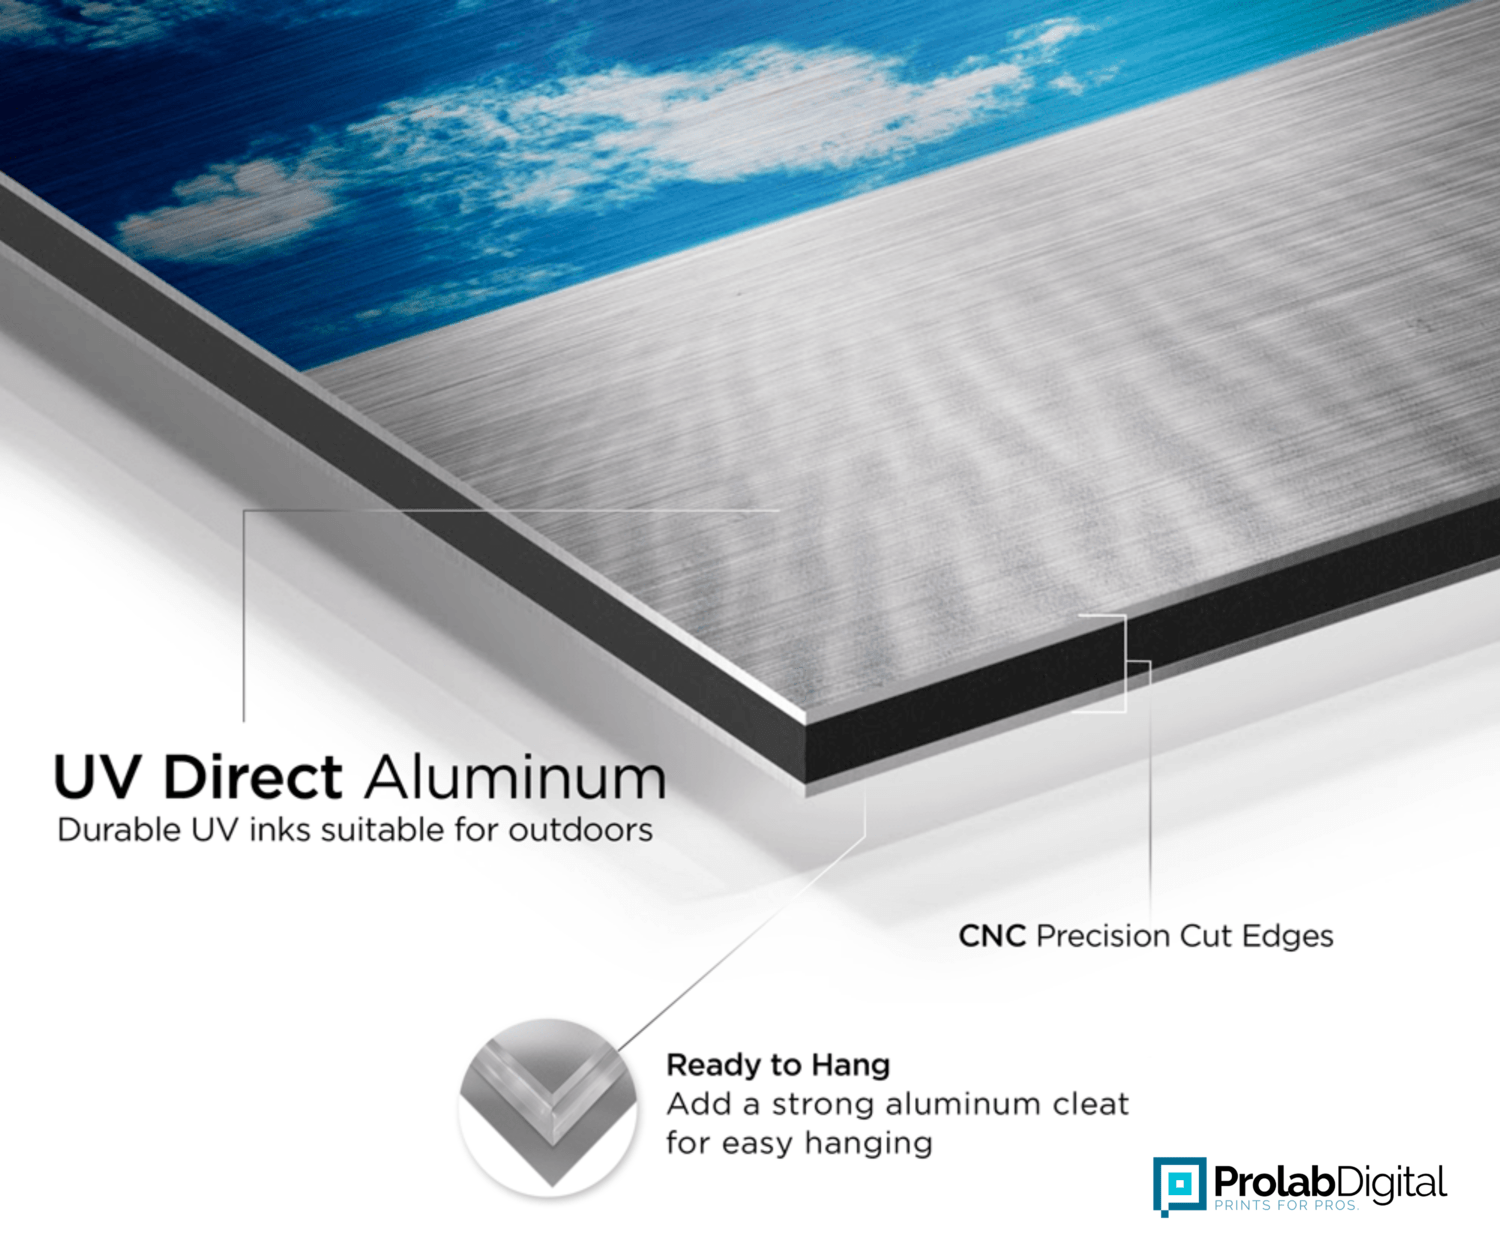 UV Direct Aluminum Metal Prints at Prolab Digital